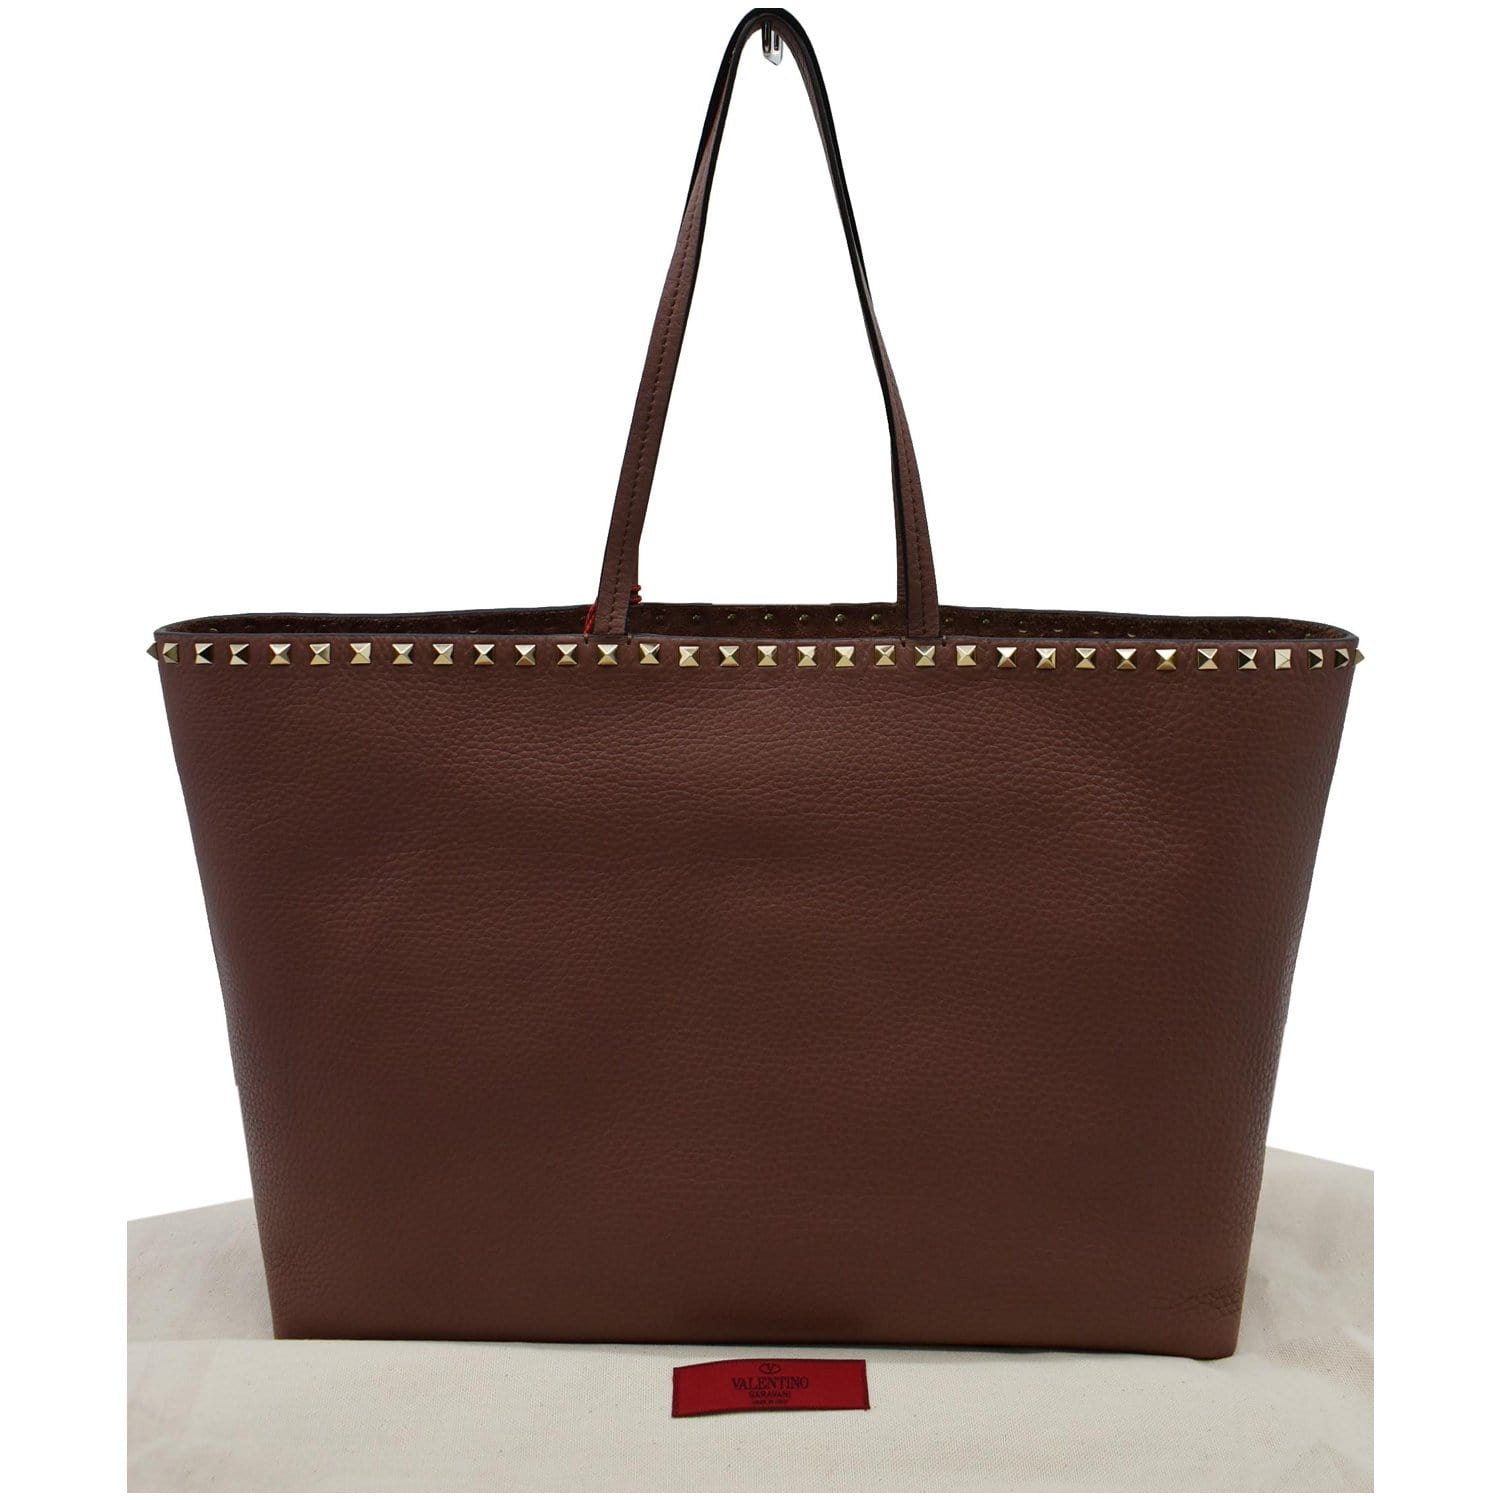 VALENTINO GARAVANI The Rockstud textured-leather shoulder bag